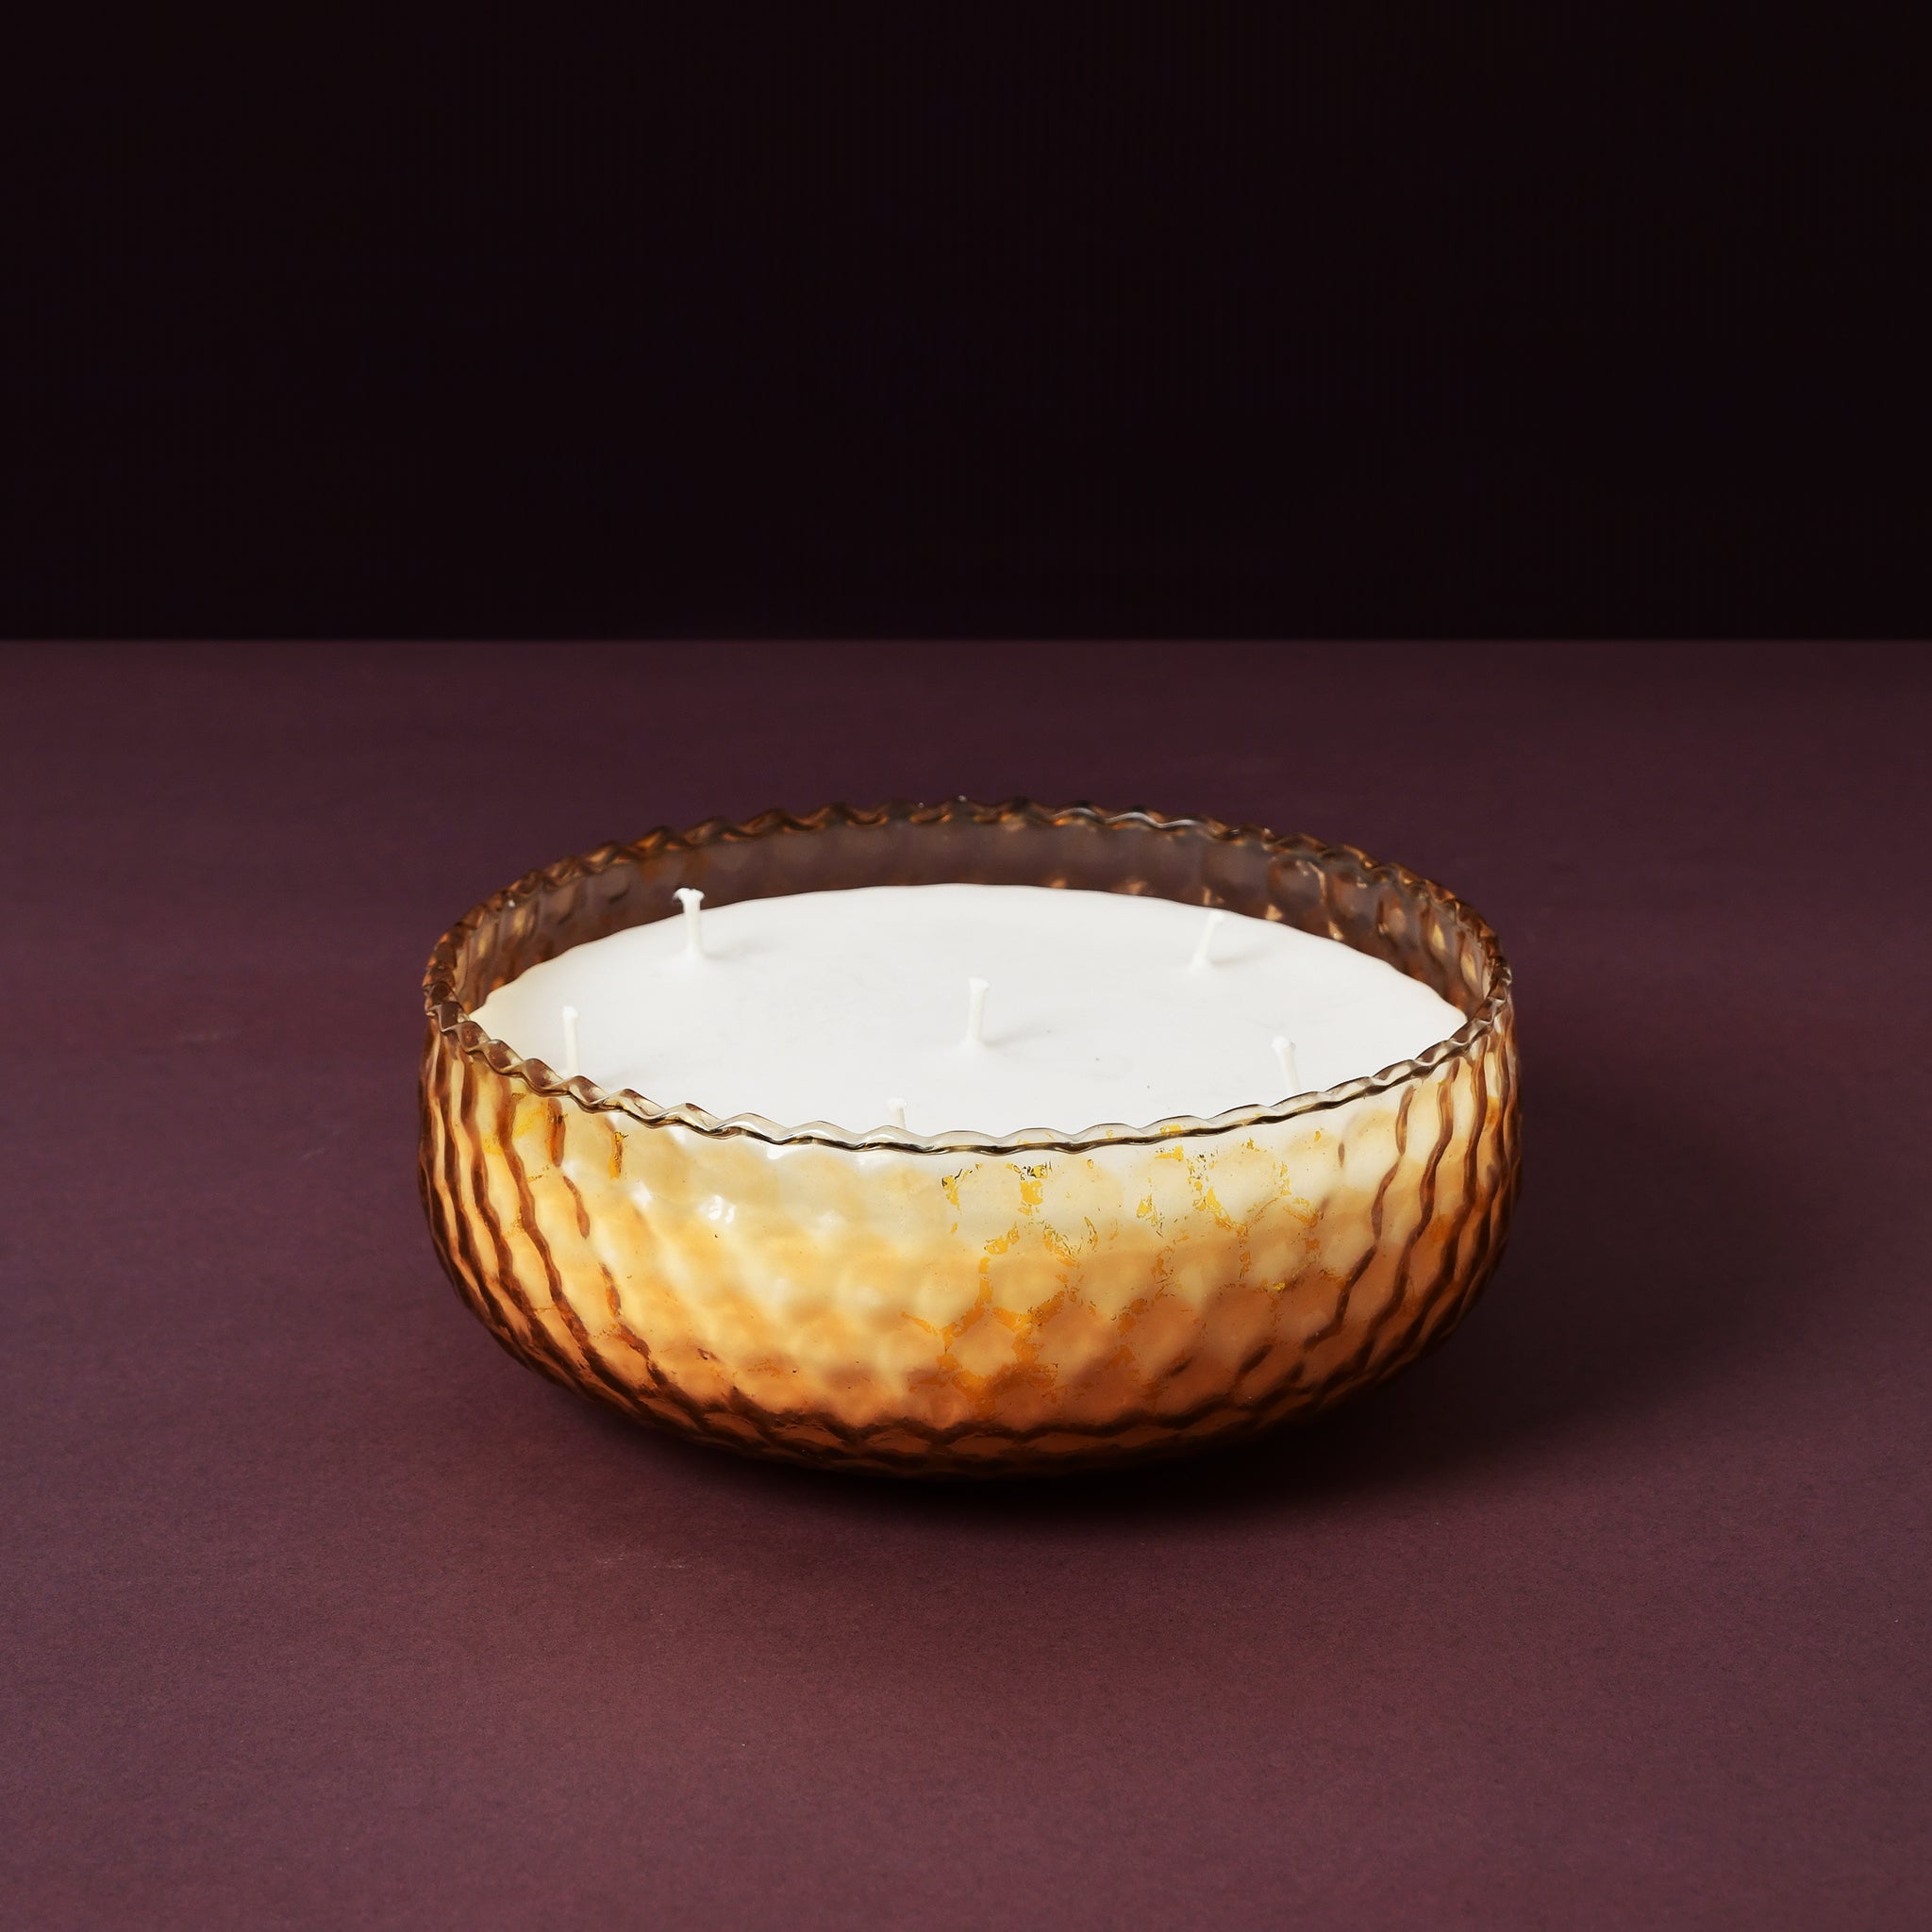 Honey Comb Gold foiled flat bowl